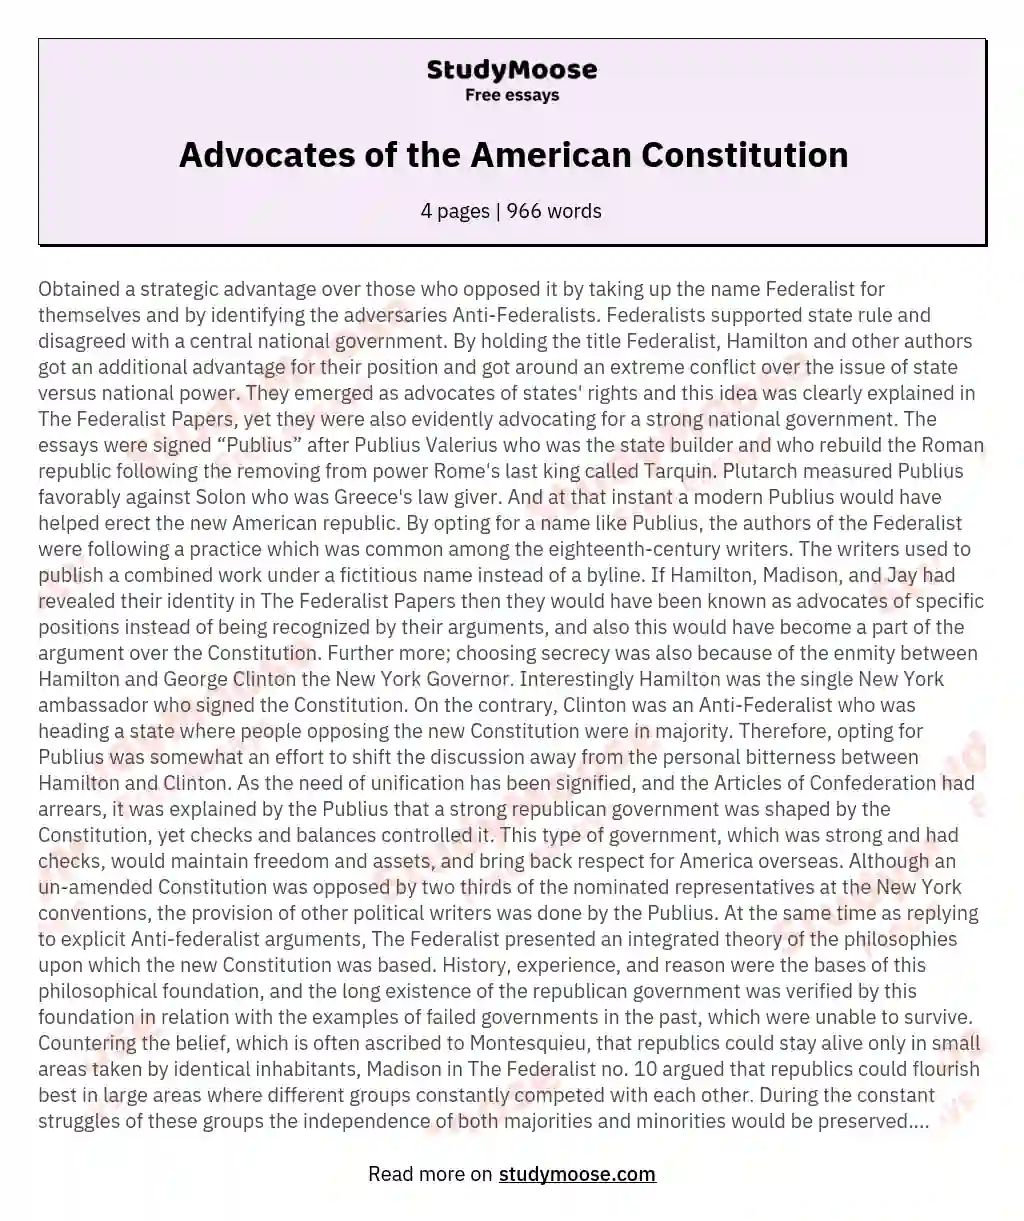 Advocates of the American Constitution essay